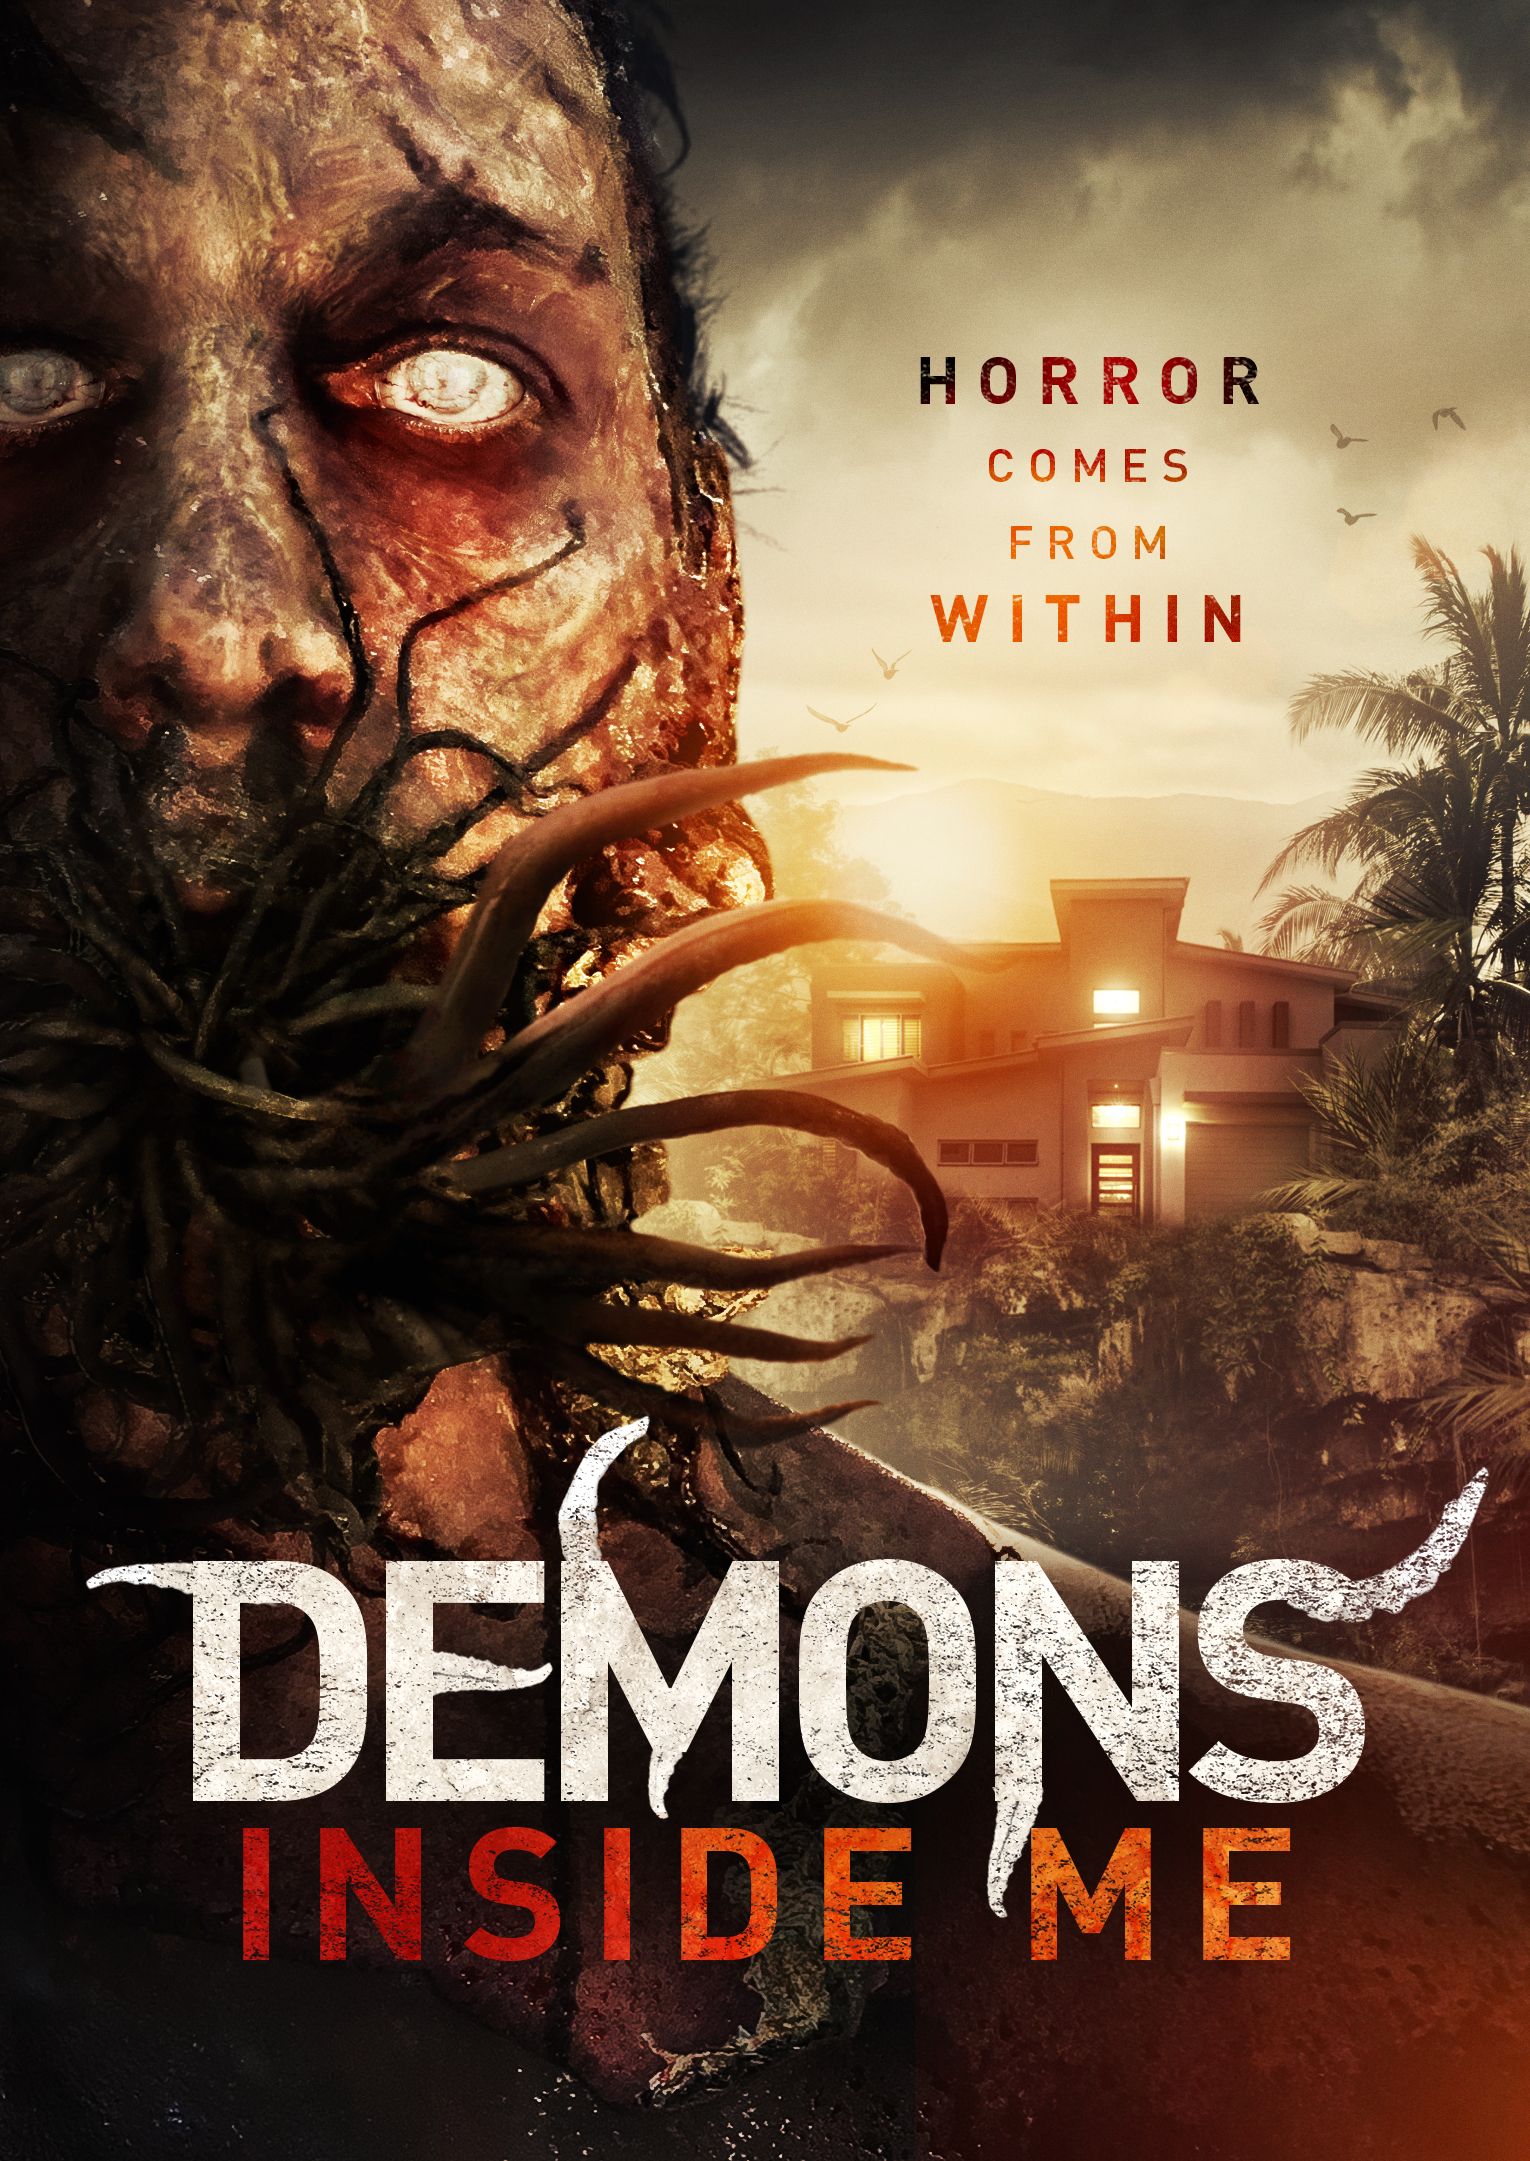 Demons Inside Me (2019) Hindi Dubbed Full Movie